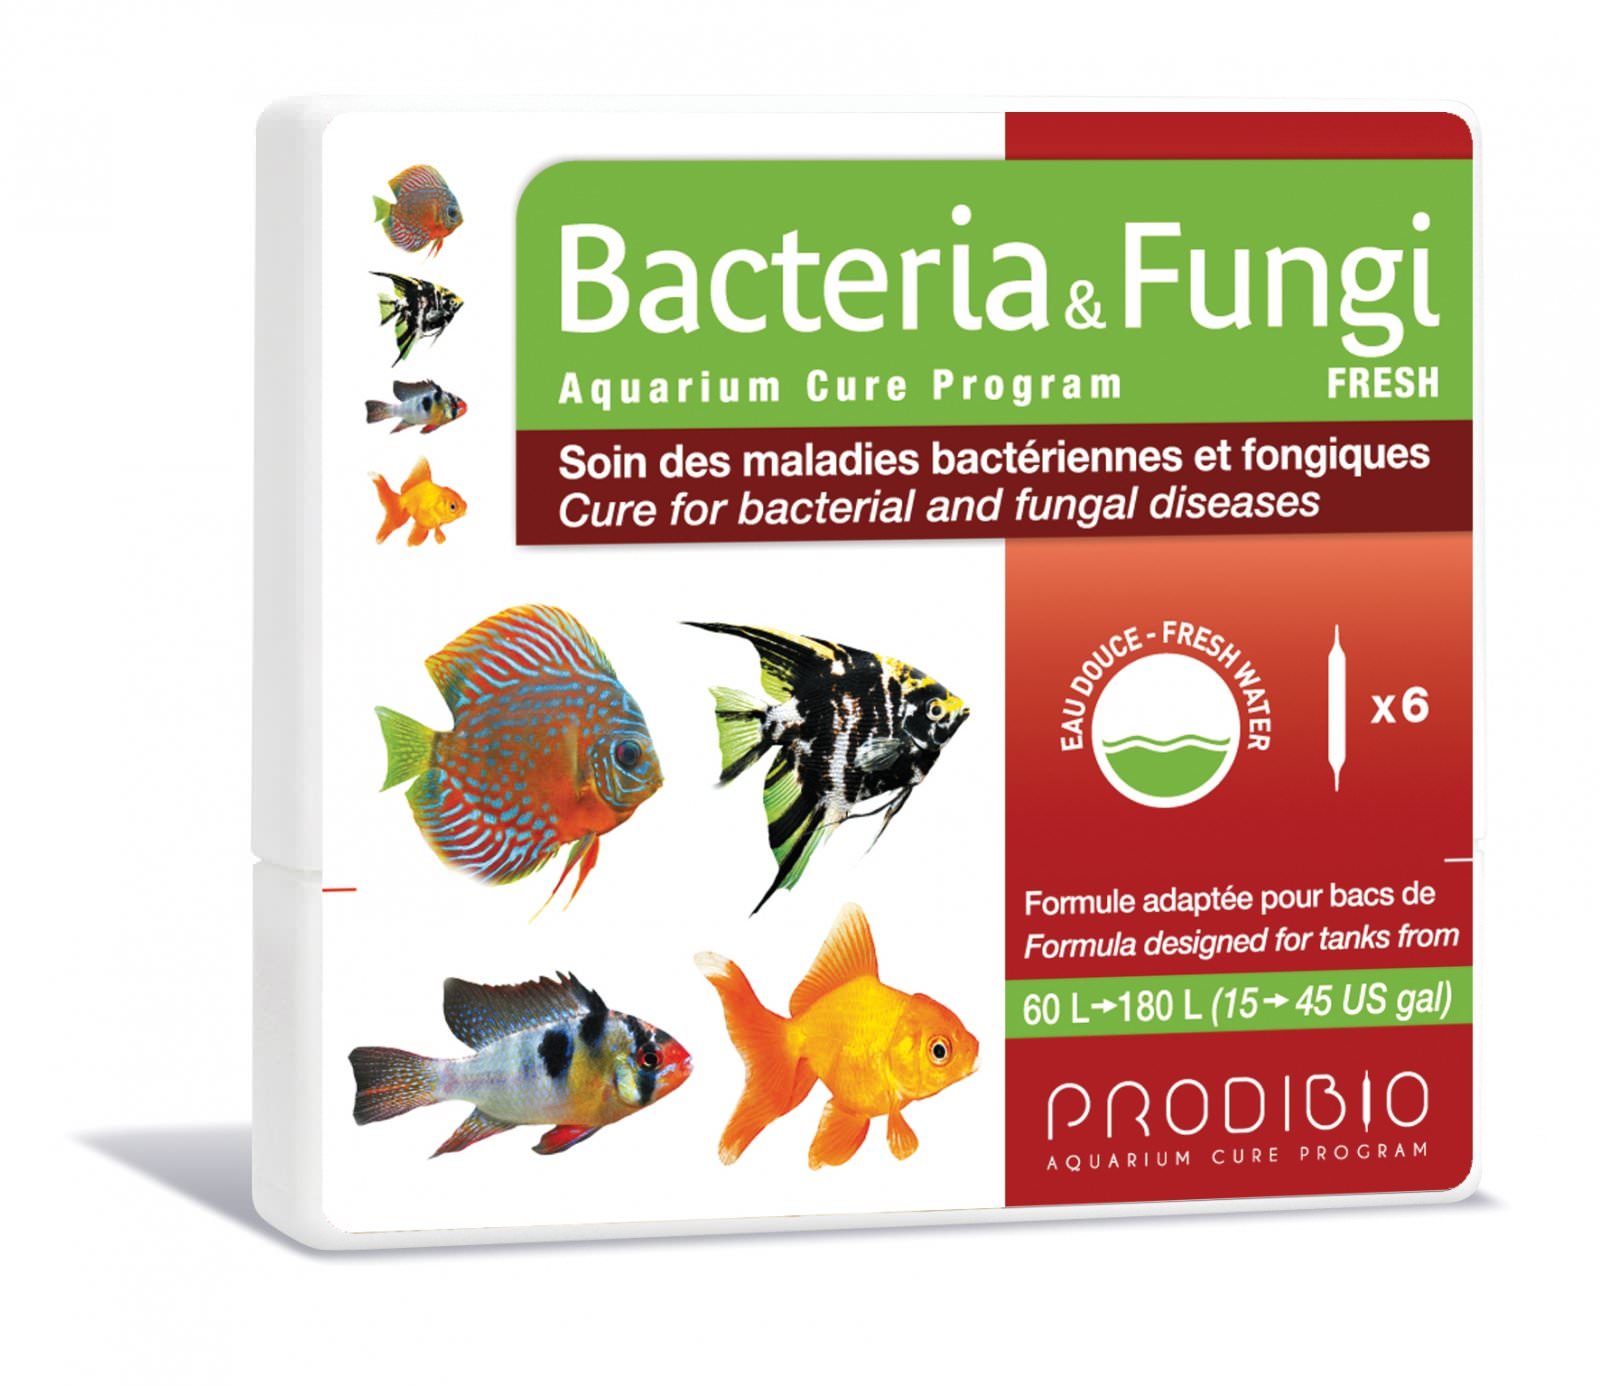 bacteria_fungi_fresh_prodibio